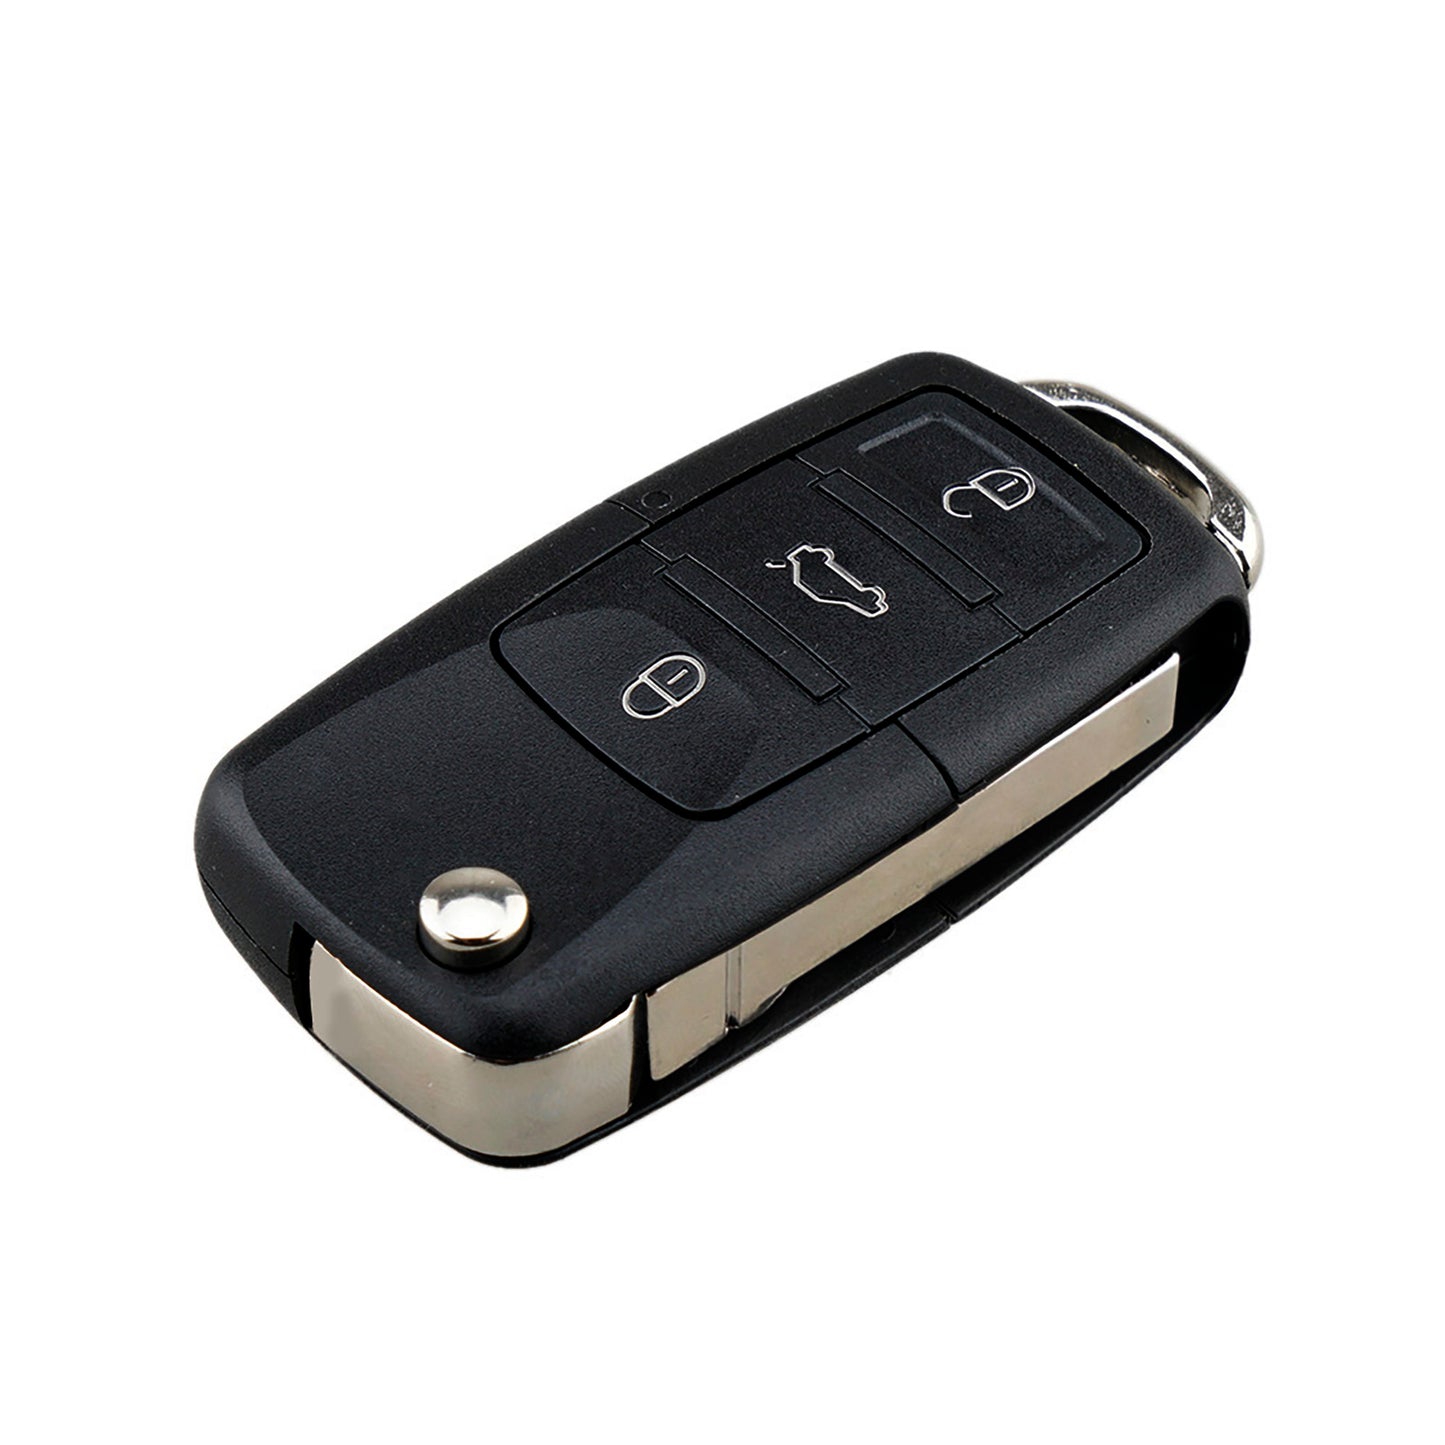 4 buttons 315MHz Smart Keyless Entry Car Fob Remote Key For 1998-2002 VW Beetle Cabrio Golf Jetta Passat FCC ID:HLO1J0959753F 1J0959753T SKU : J8137